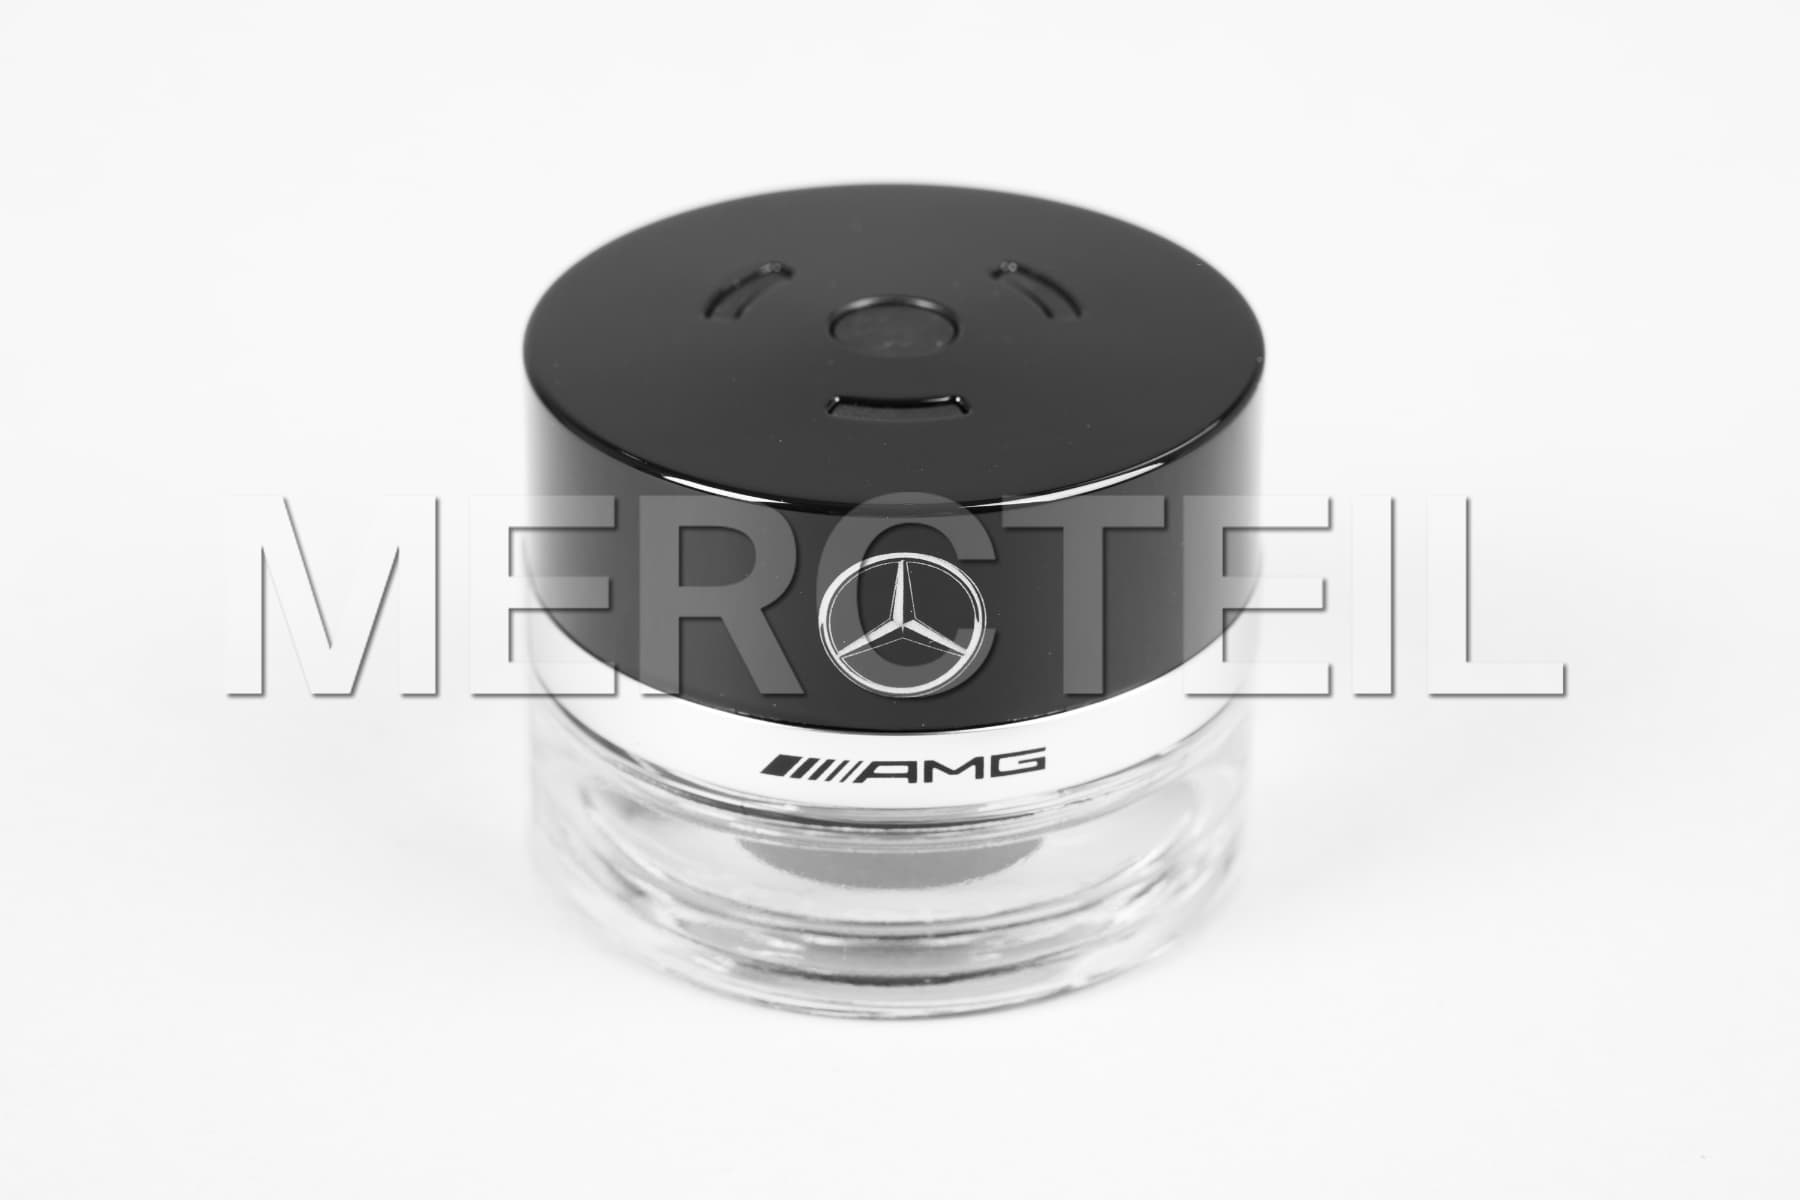 Duft Parfum Air Balance AMG #63 Flakon Original Mercedes AMG (Teilenummer: A2908990400)